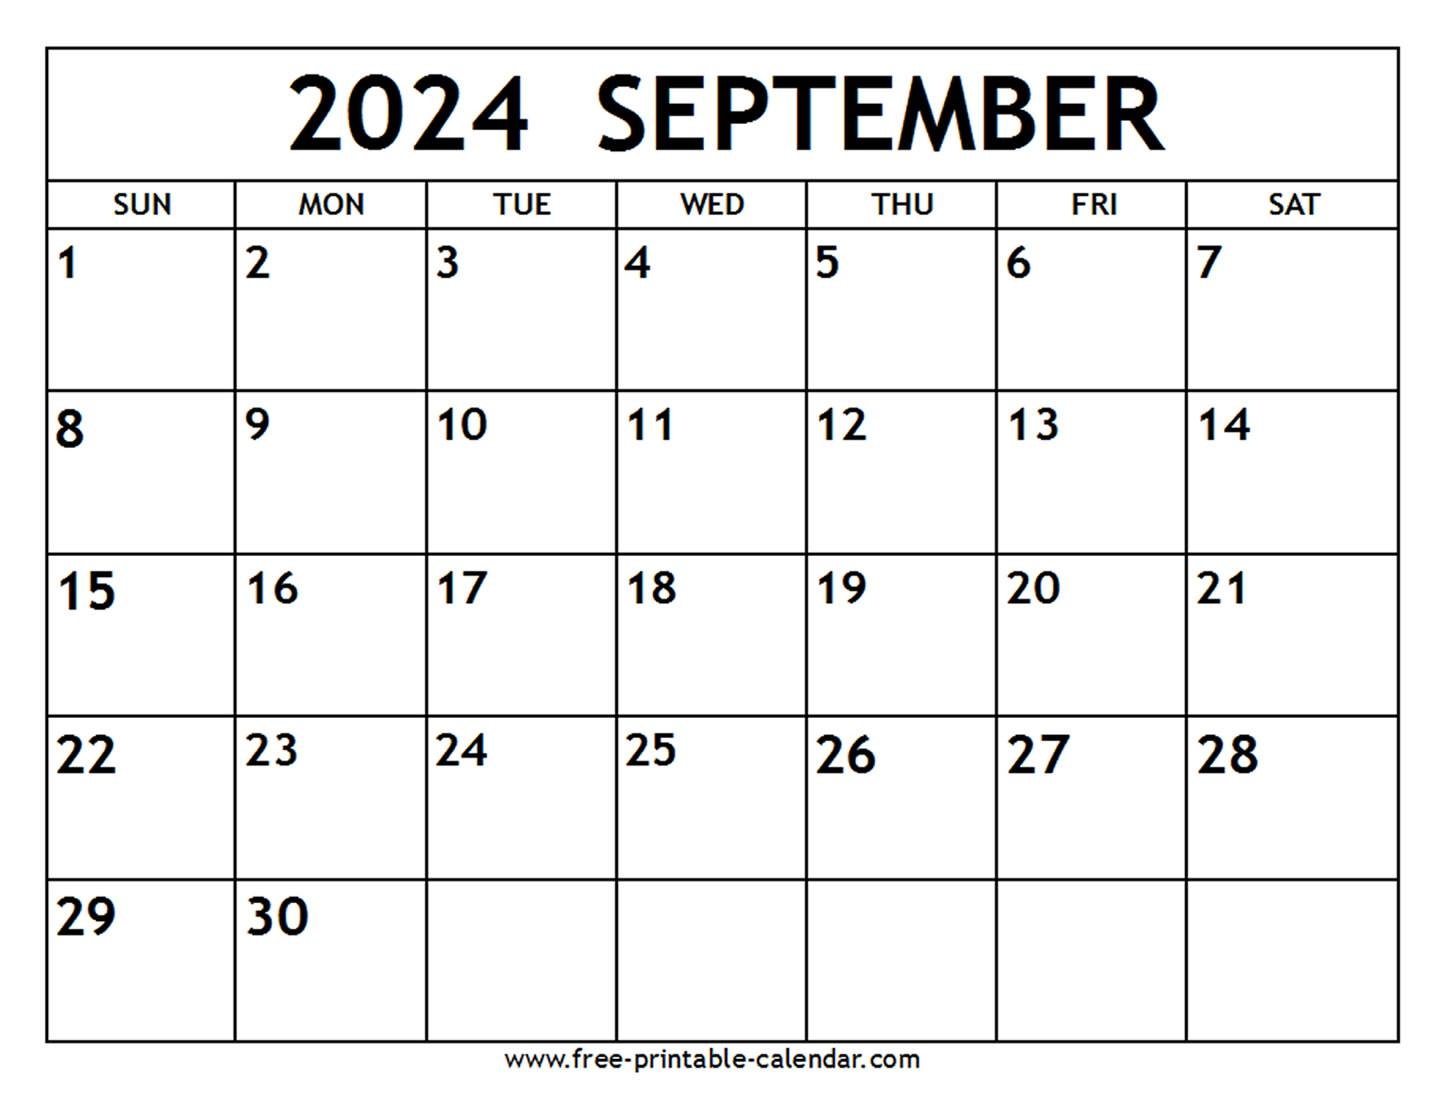 September 2024 Calendar - Free-Printable-Calendar within Free Printable Calendar 2024 Sept December